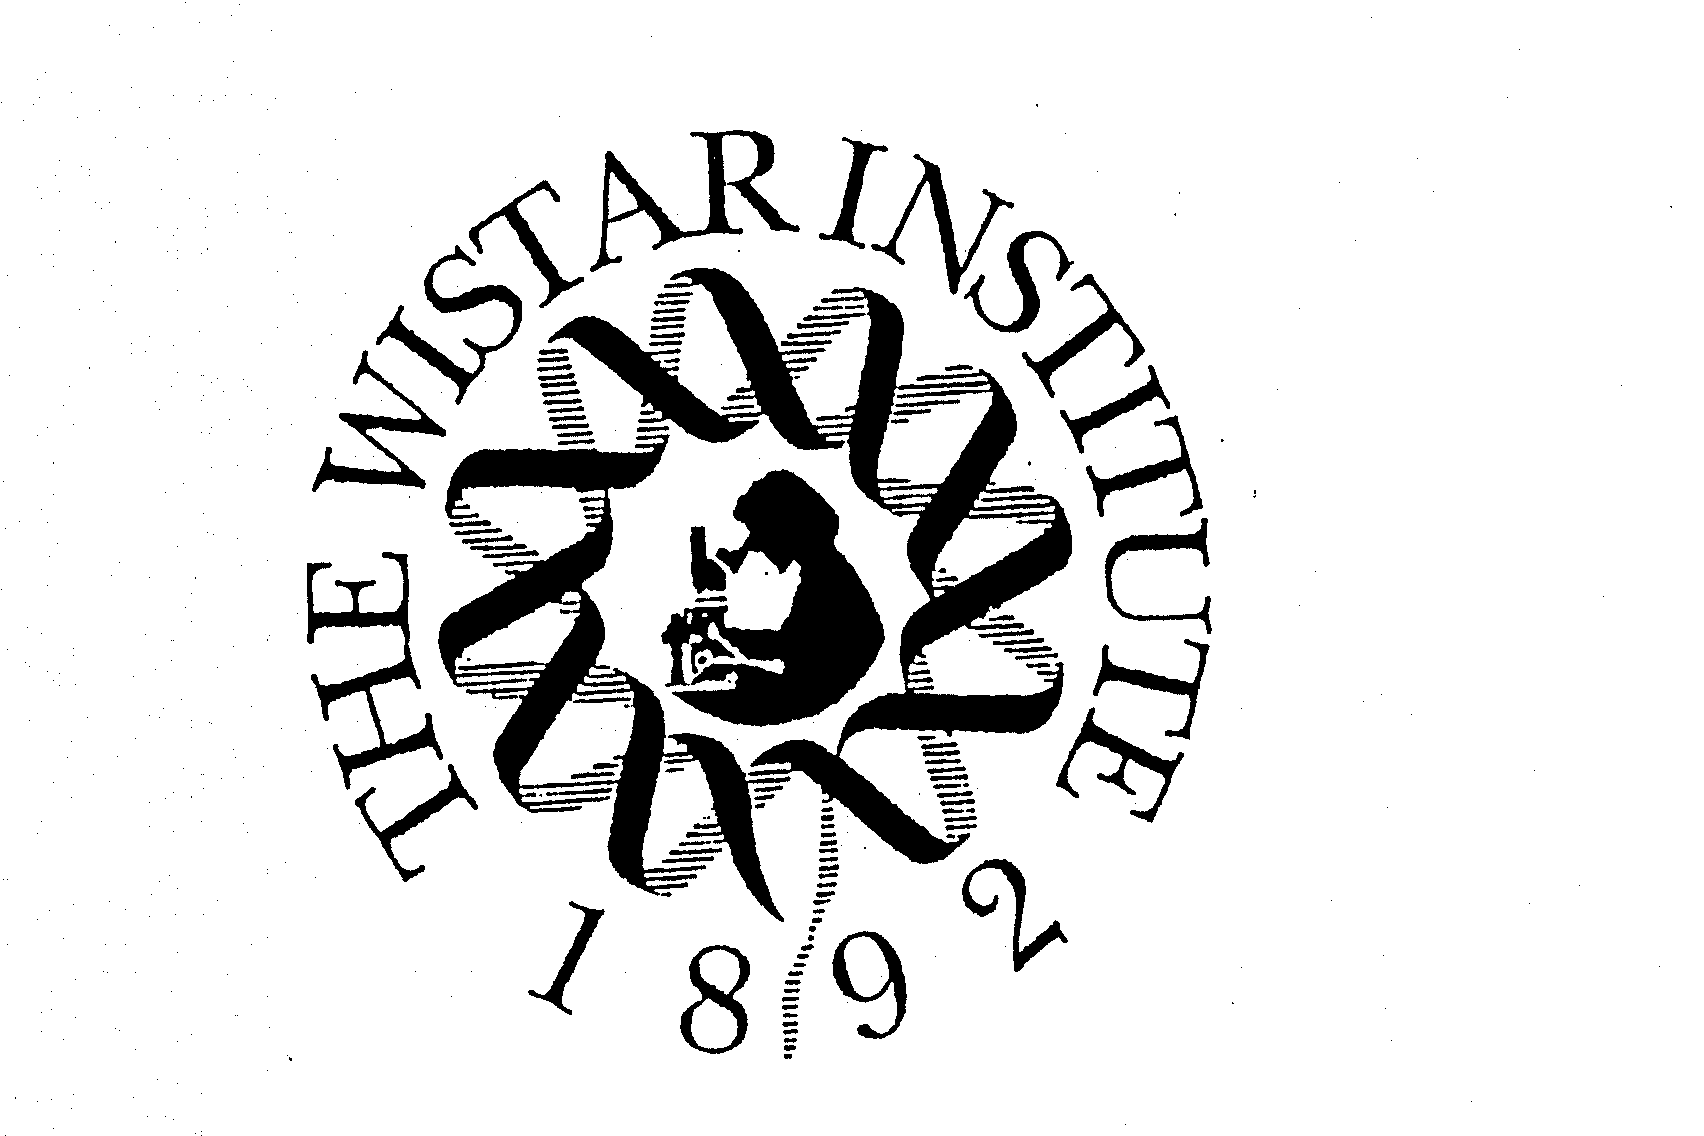  THE WISTAR INSTITUTE 1892